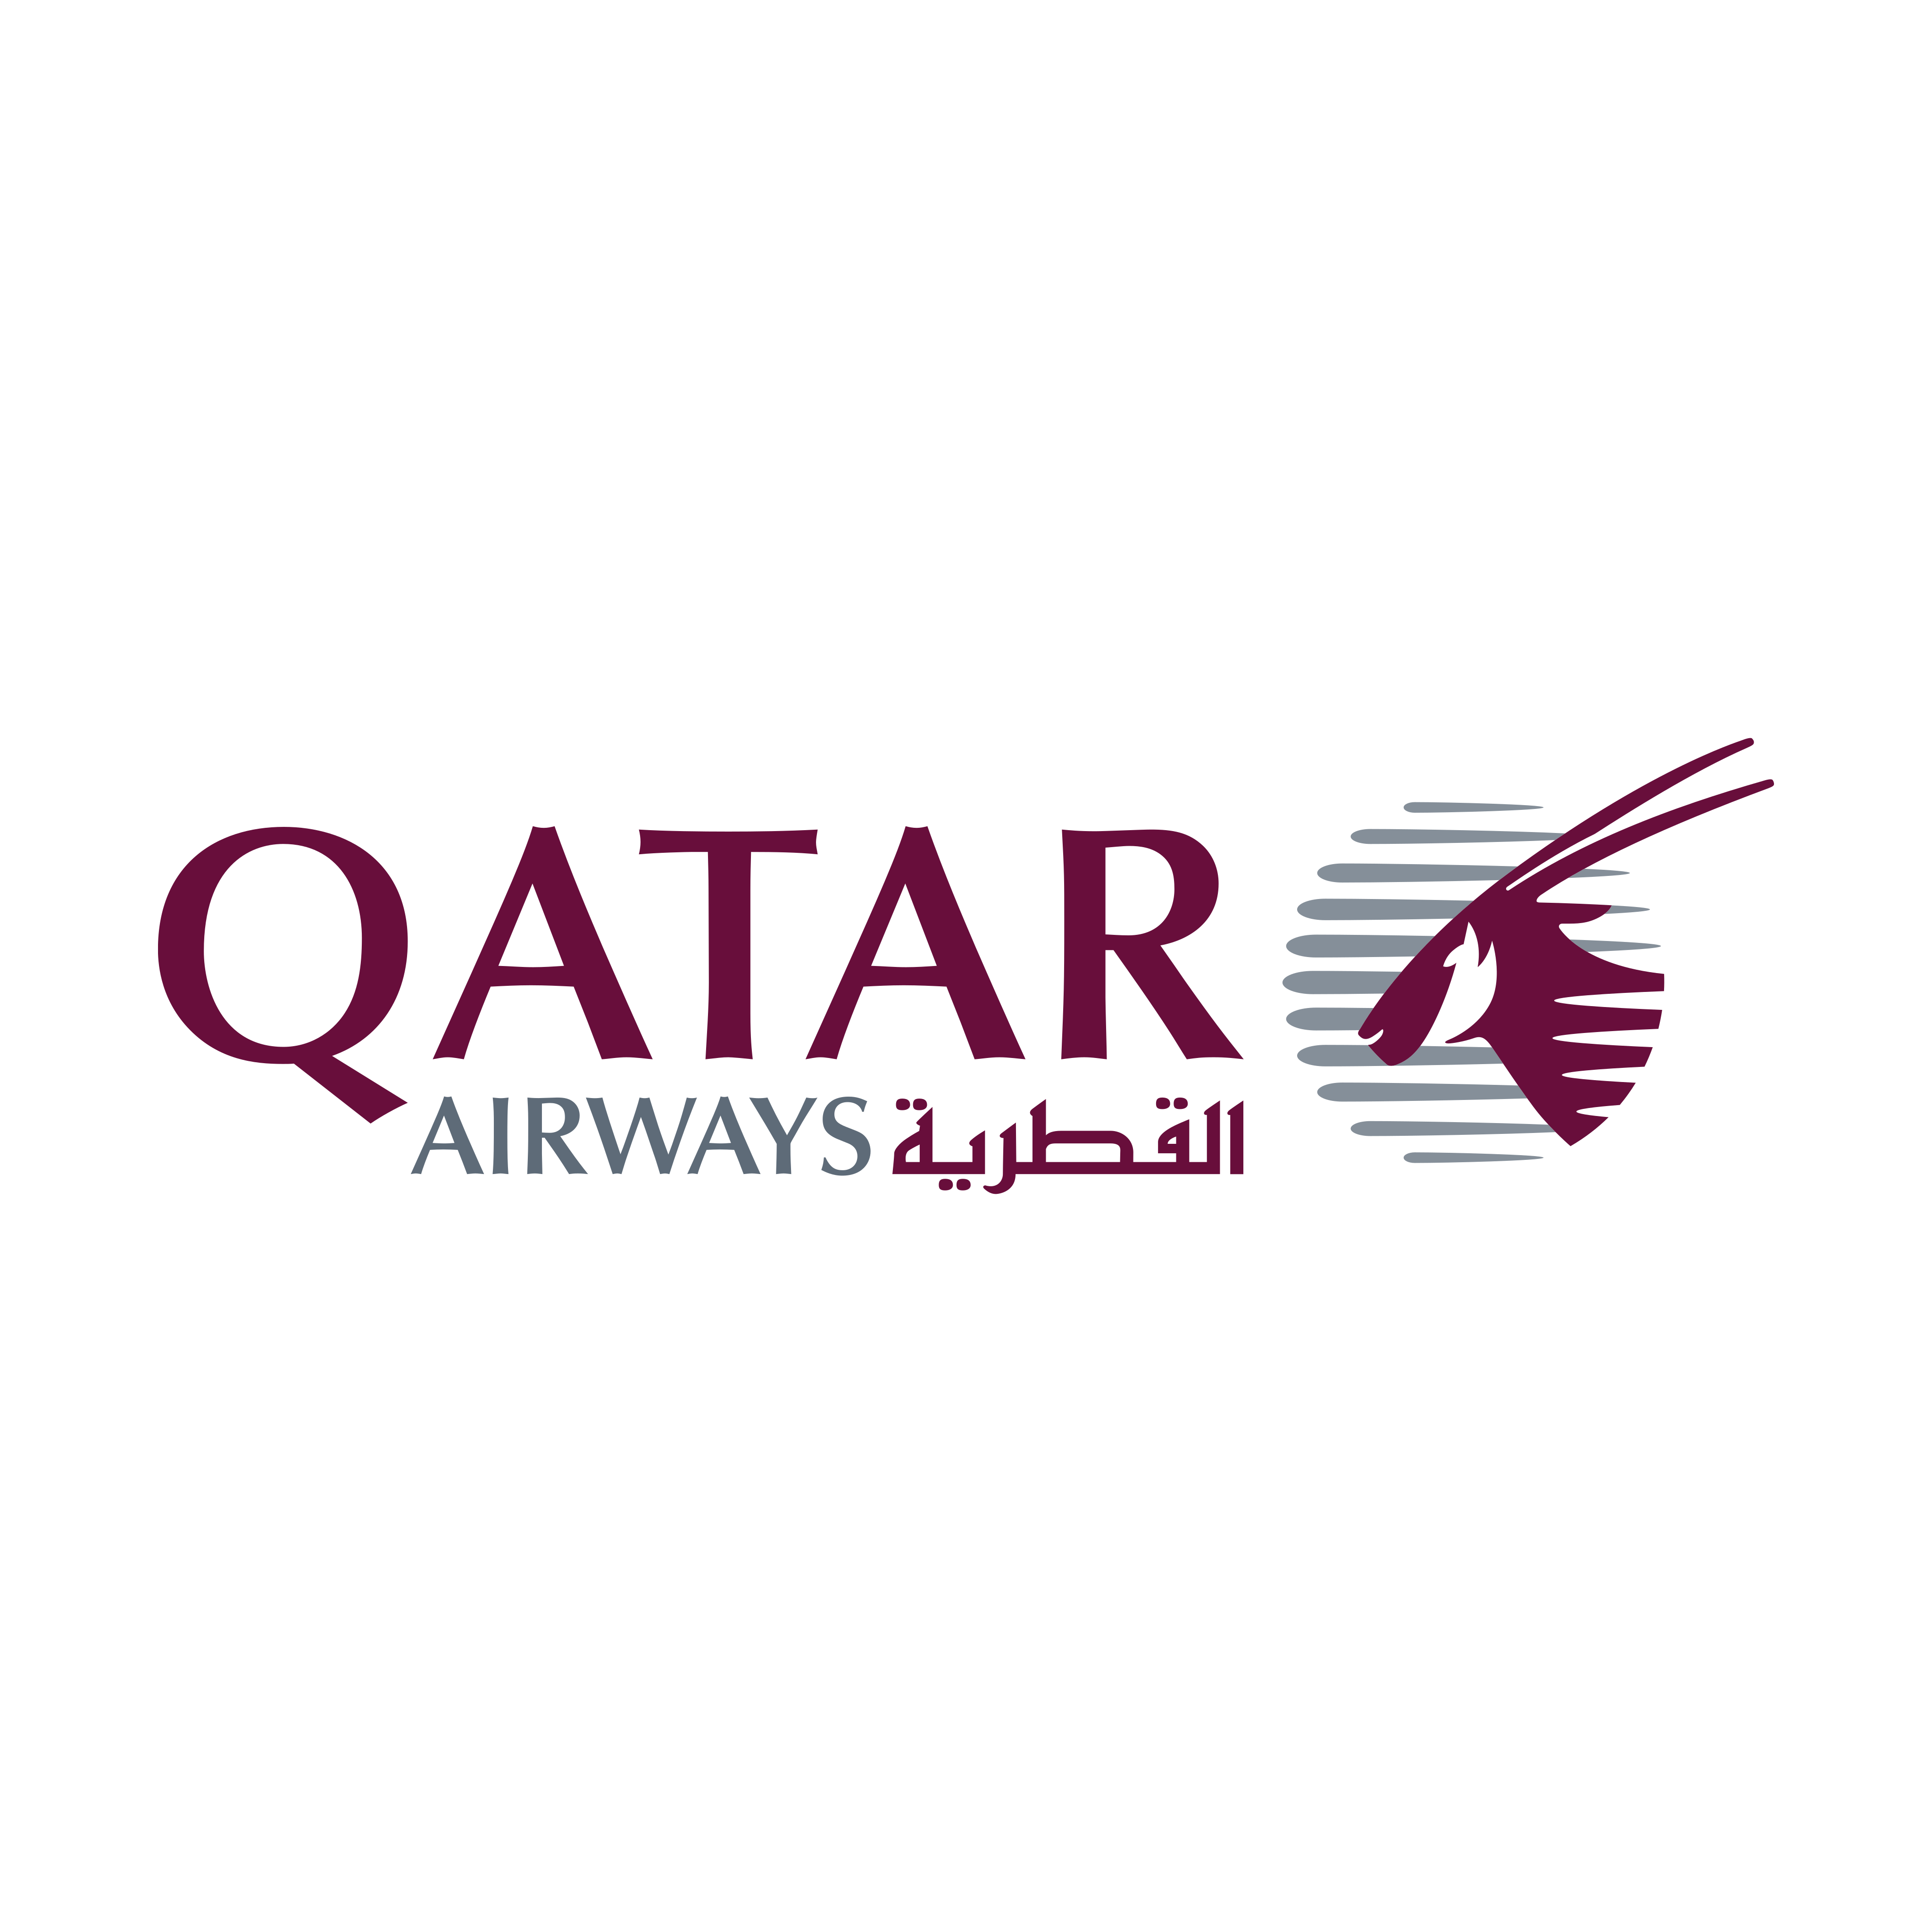 qatar airways logo 0 - Qatar Airways Logo